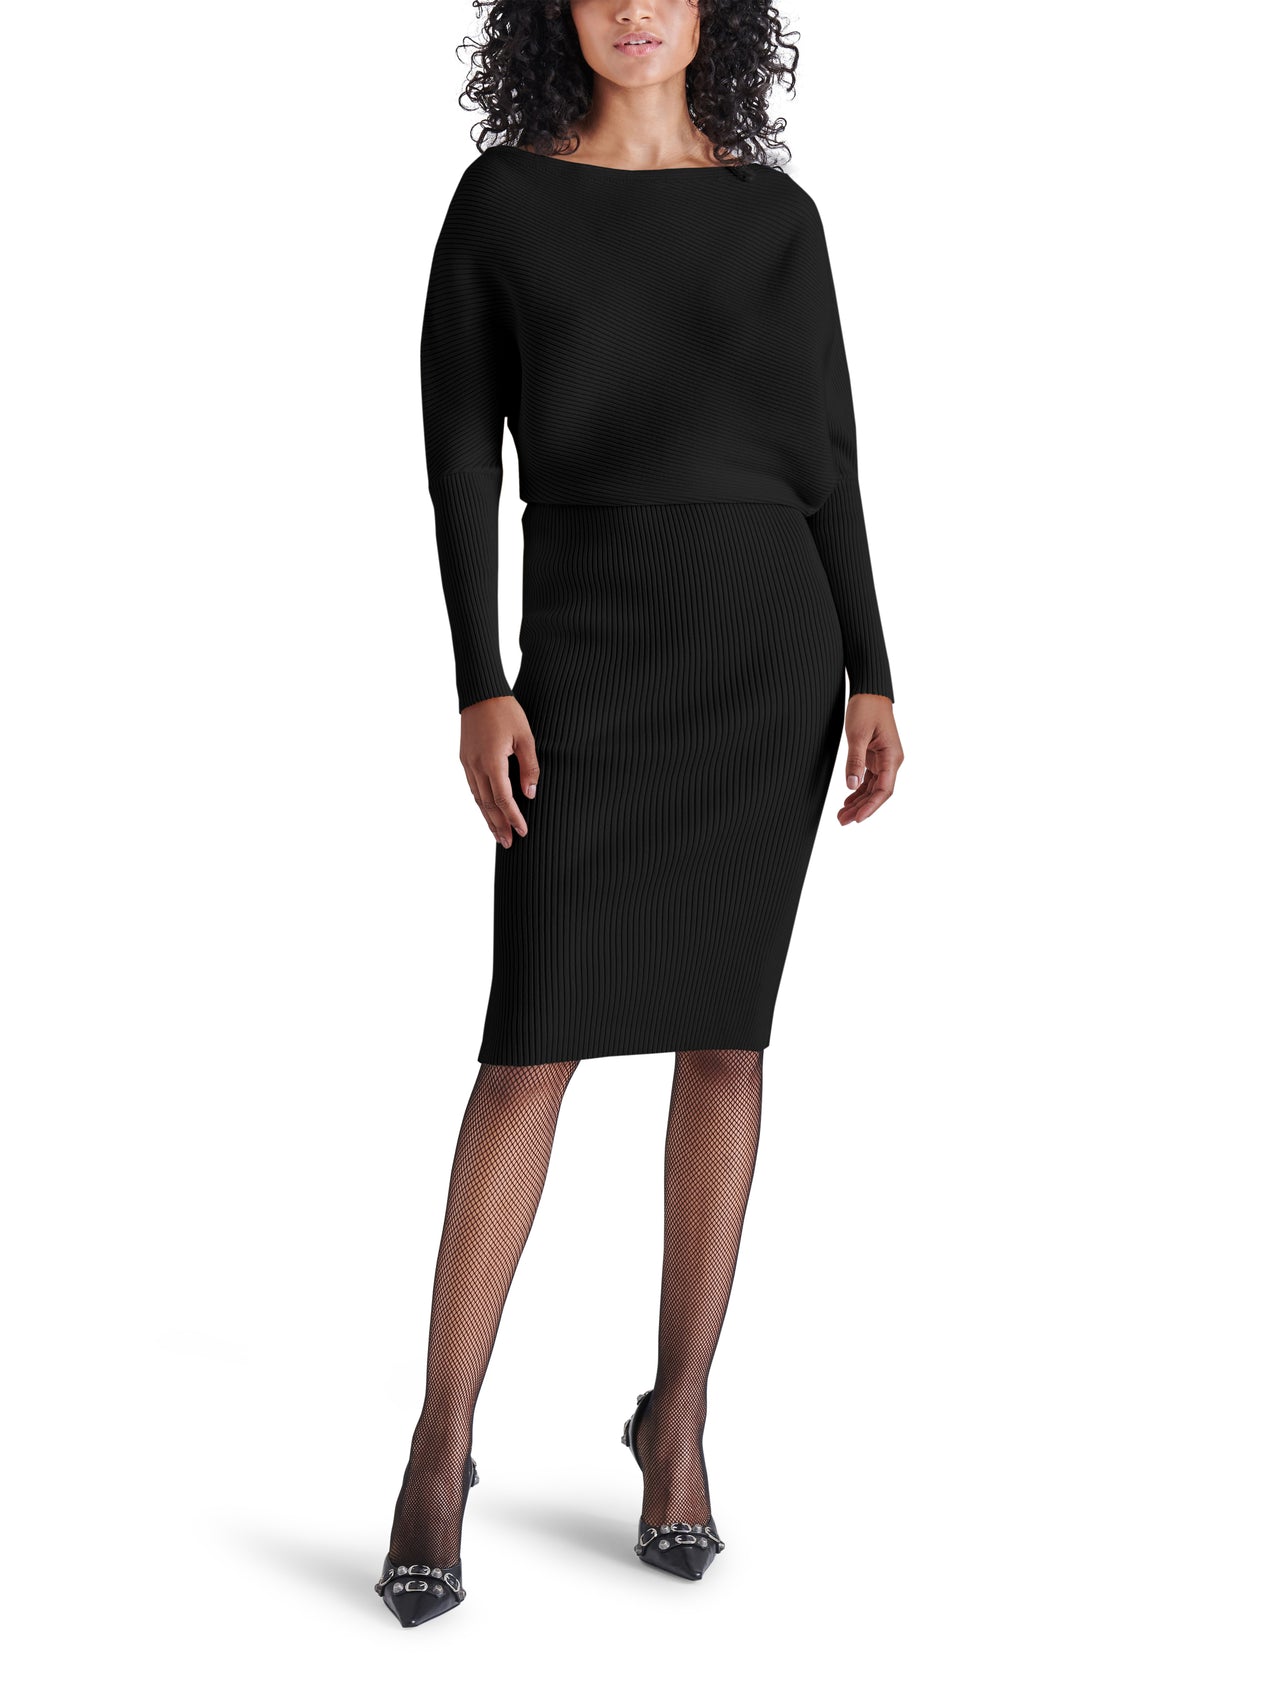 Lori Off The Shoulder Dress Black, Mini Dress by Steve Madden | LIT Boutique